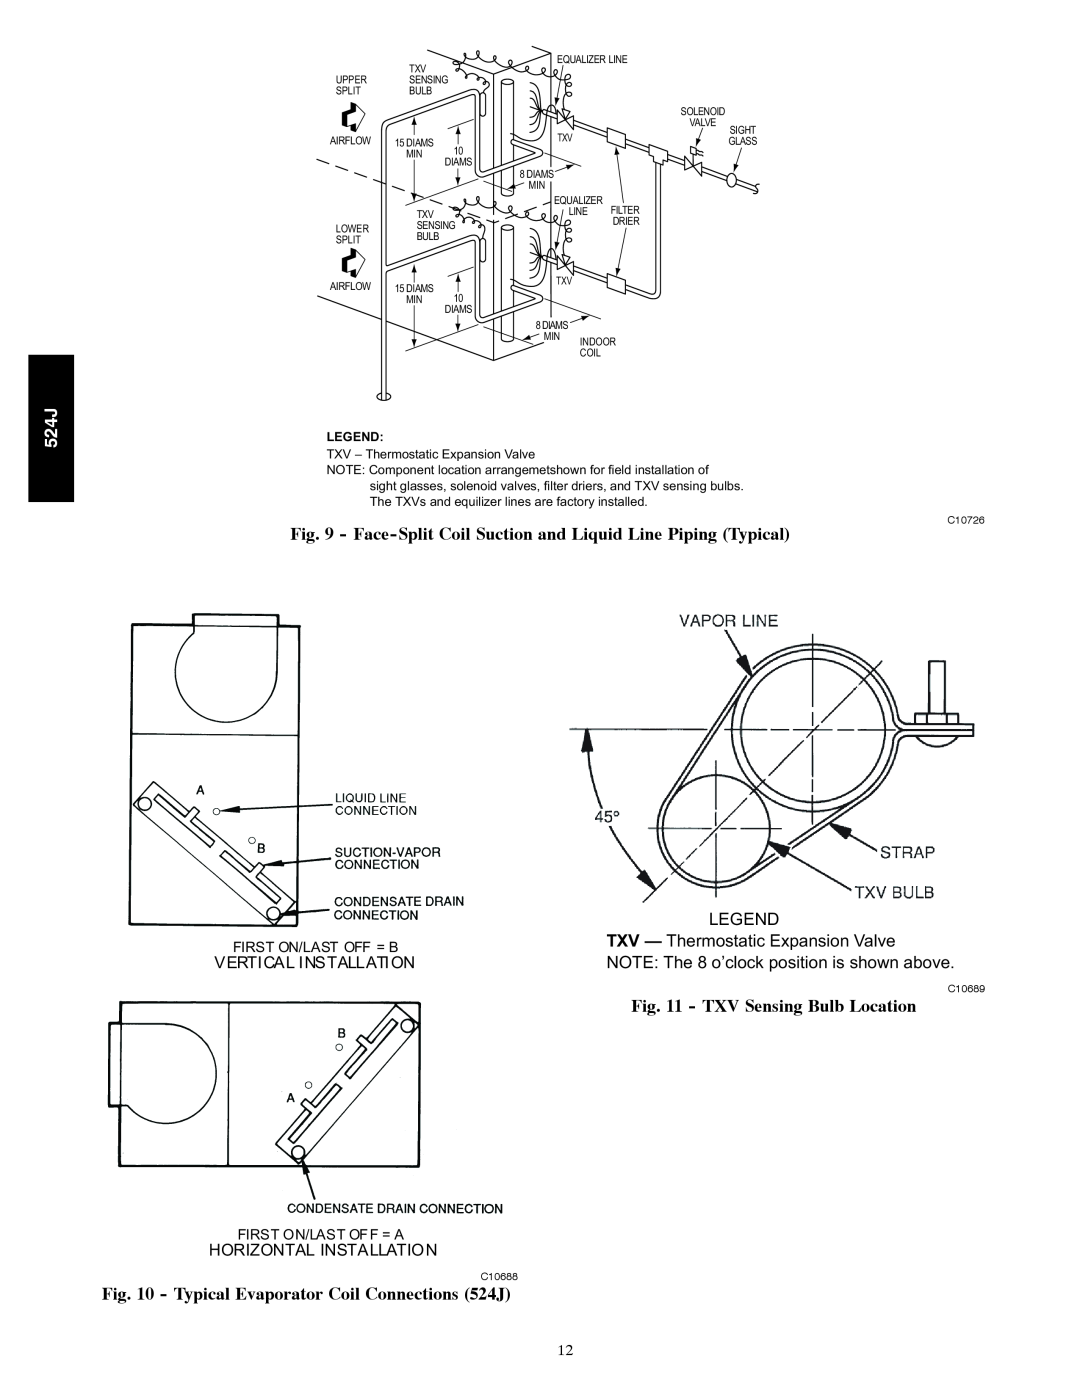 Bryant 524J manual TXV Sensing Bulb Location, Vertical Installation, Horizontal Installation 